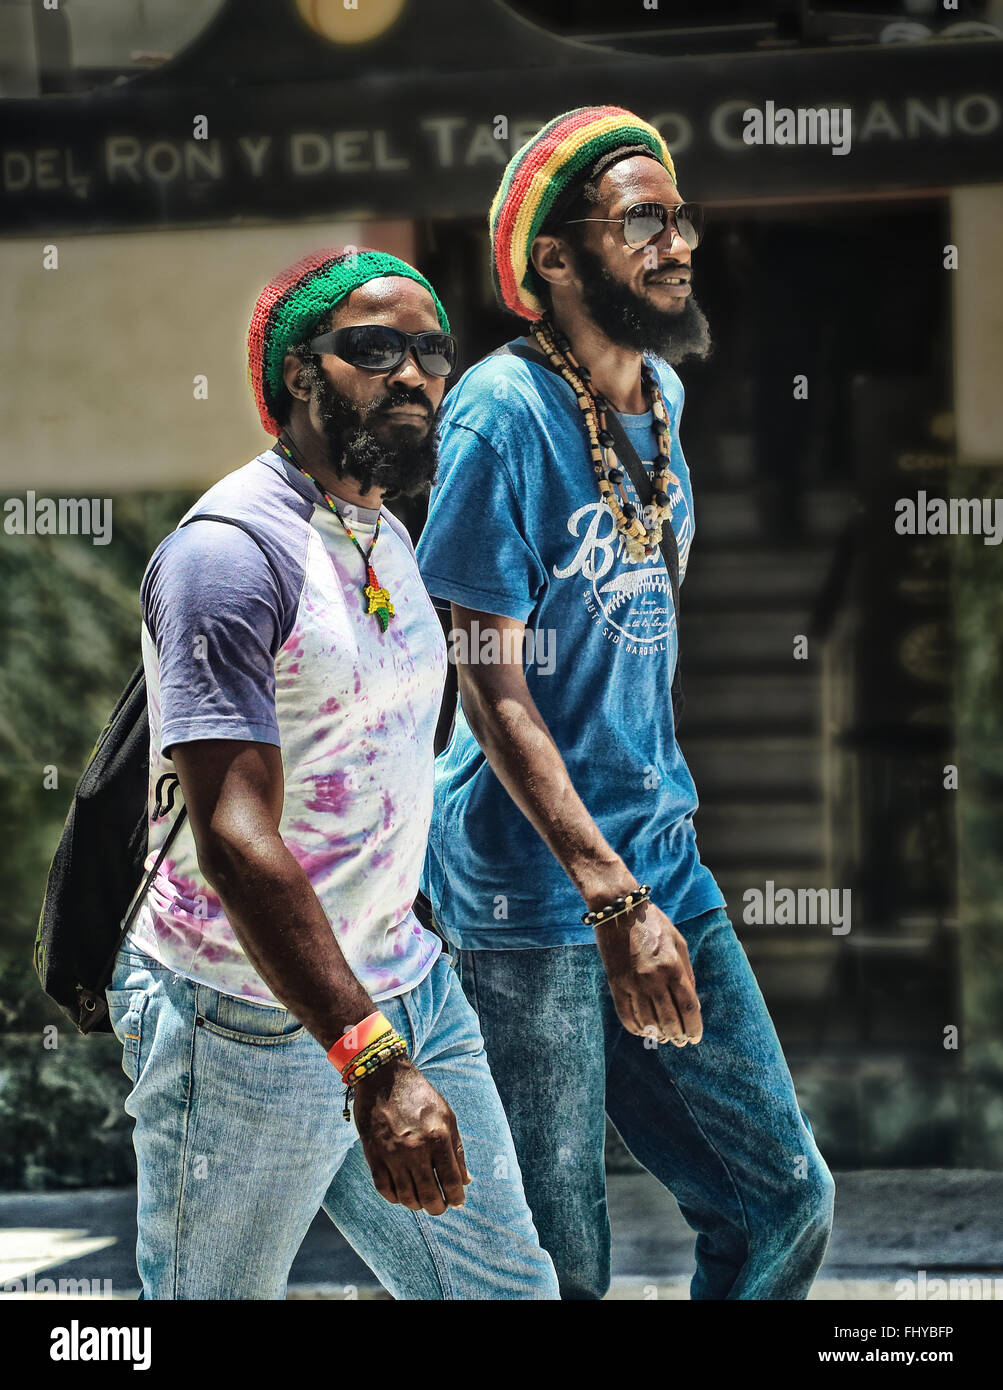 Escena callejera. Retrato de negros cubanos rastafari Foto de stock